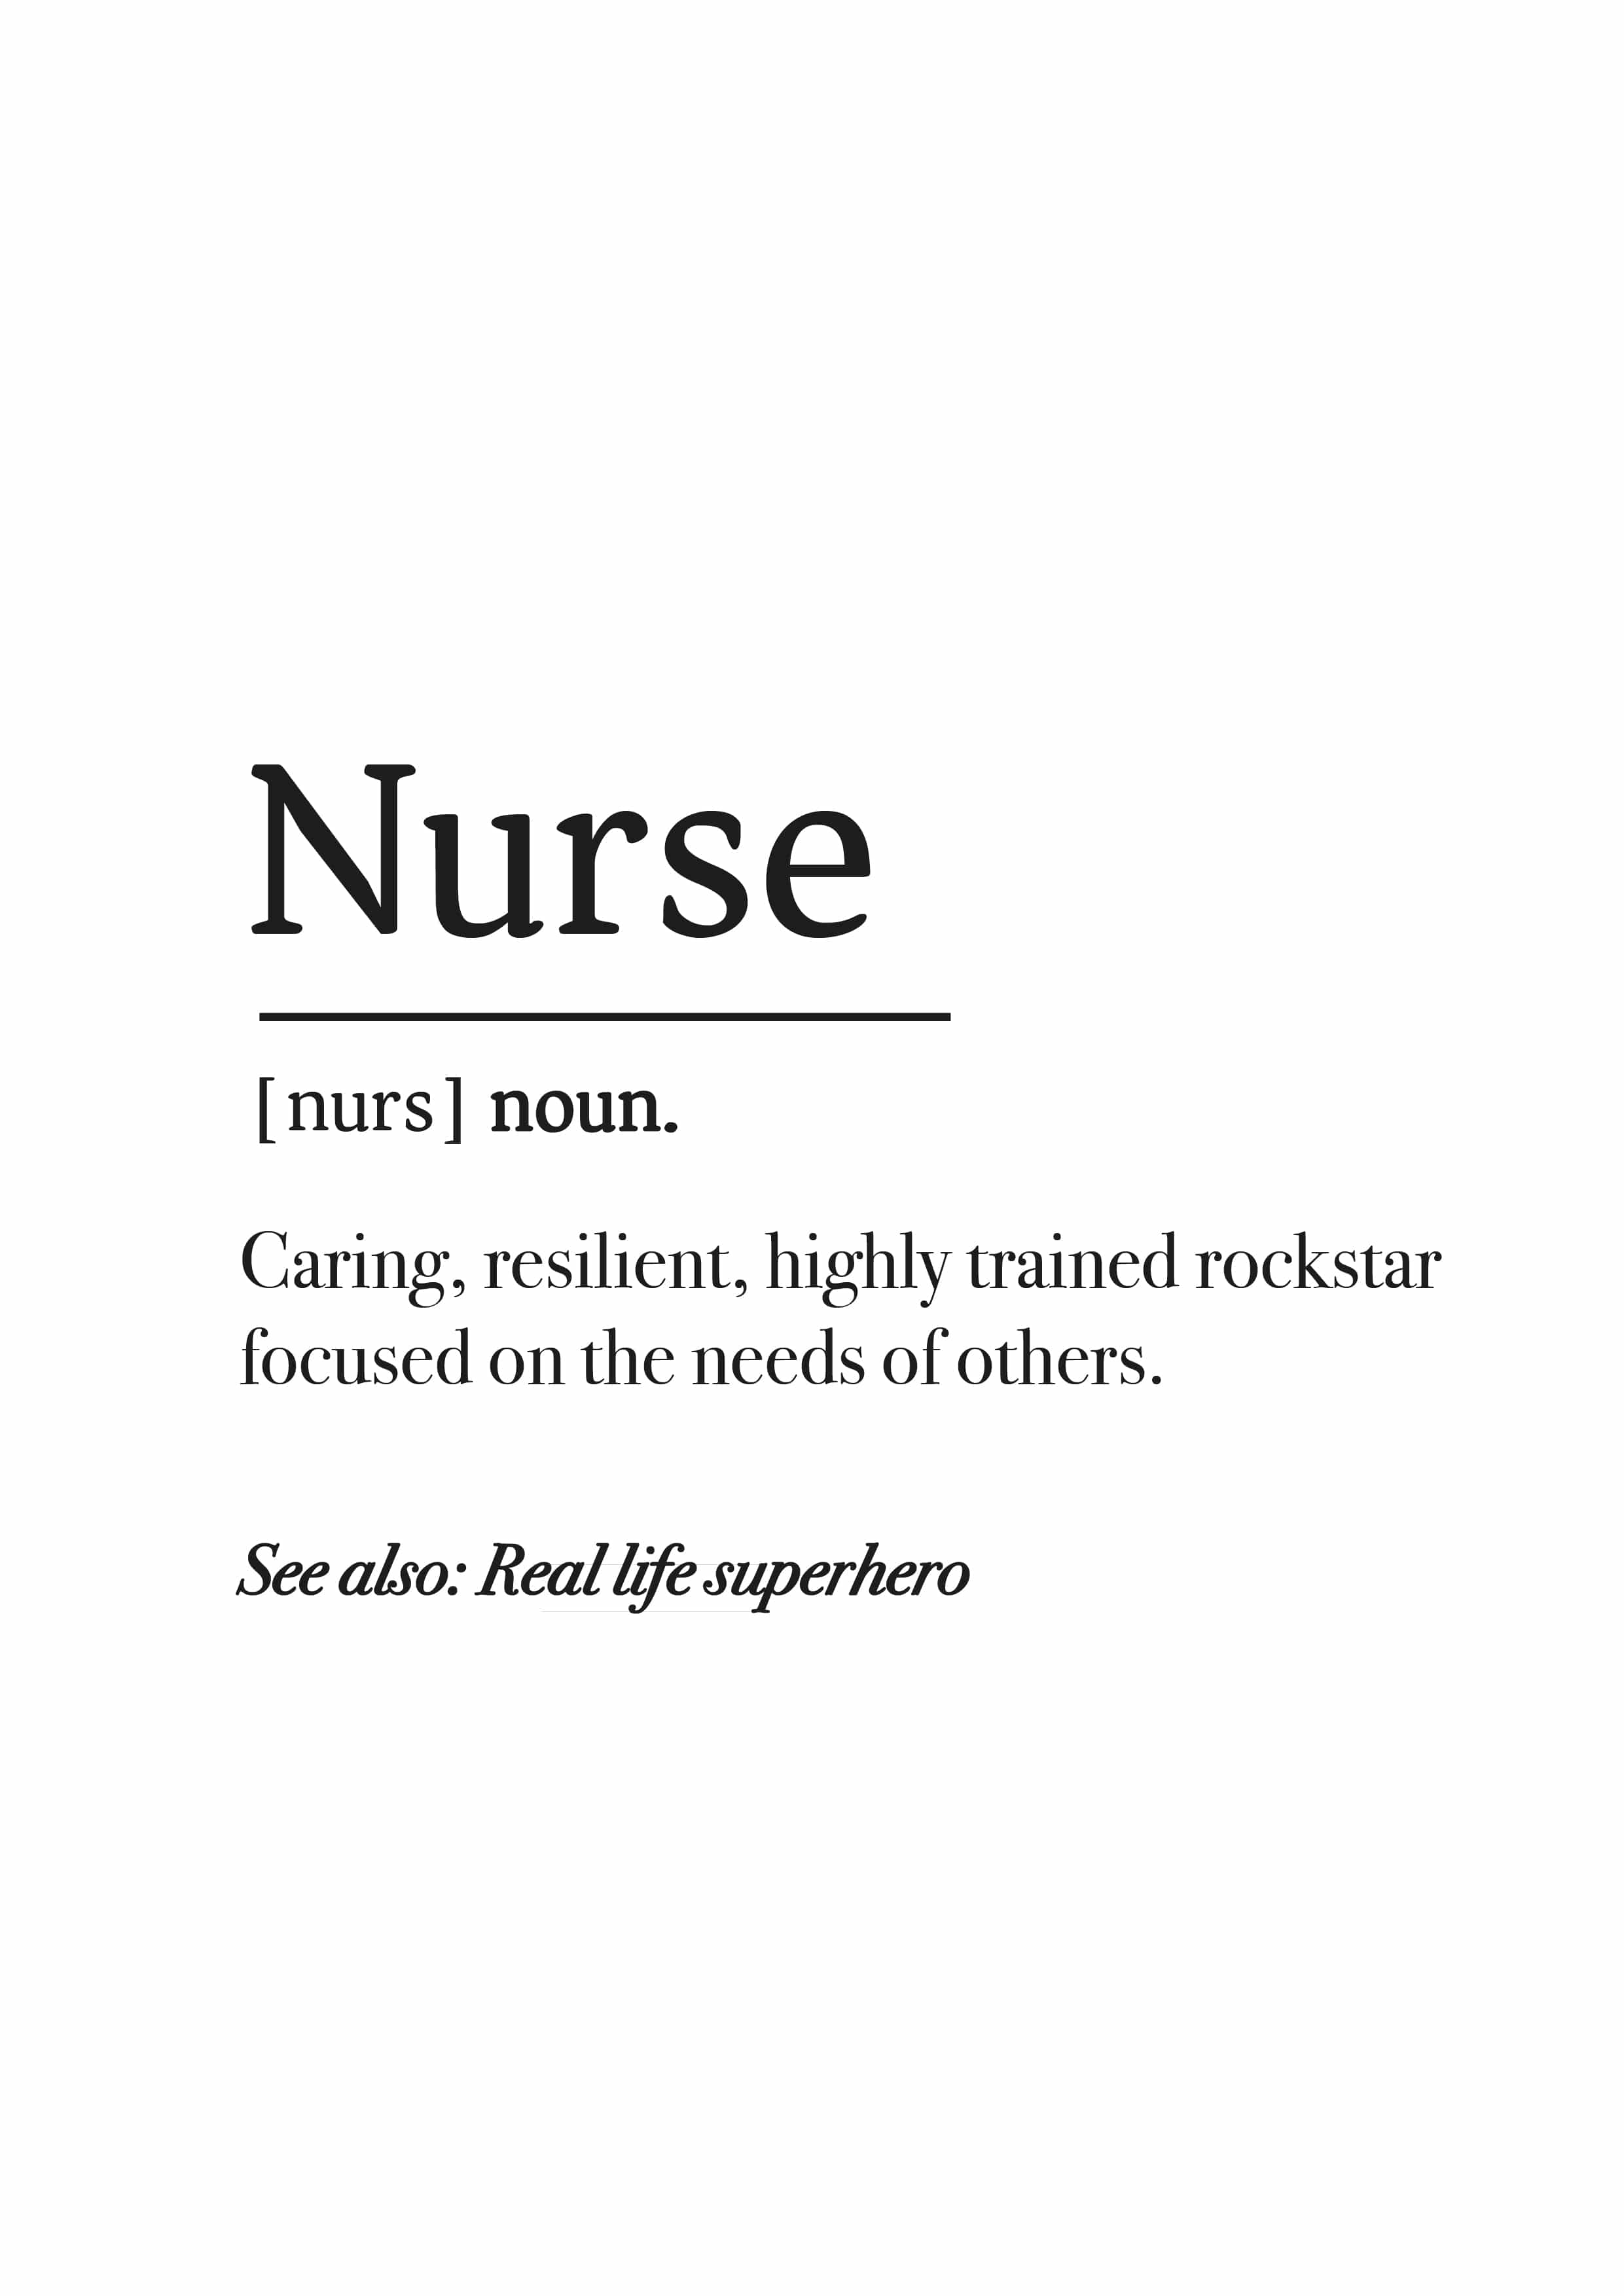 Nurse Definition Poster / Digital Download - Arts & Crafts - Medicus Scrub Caps